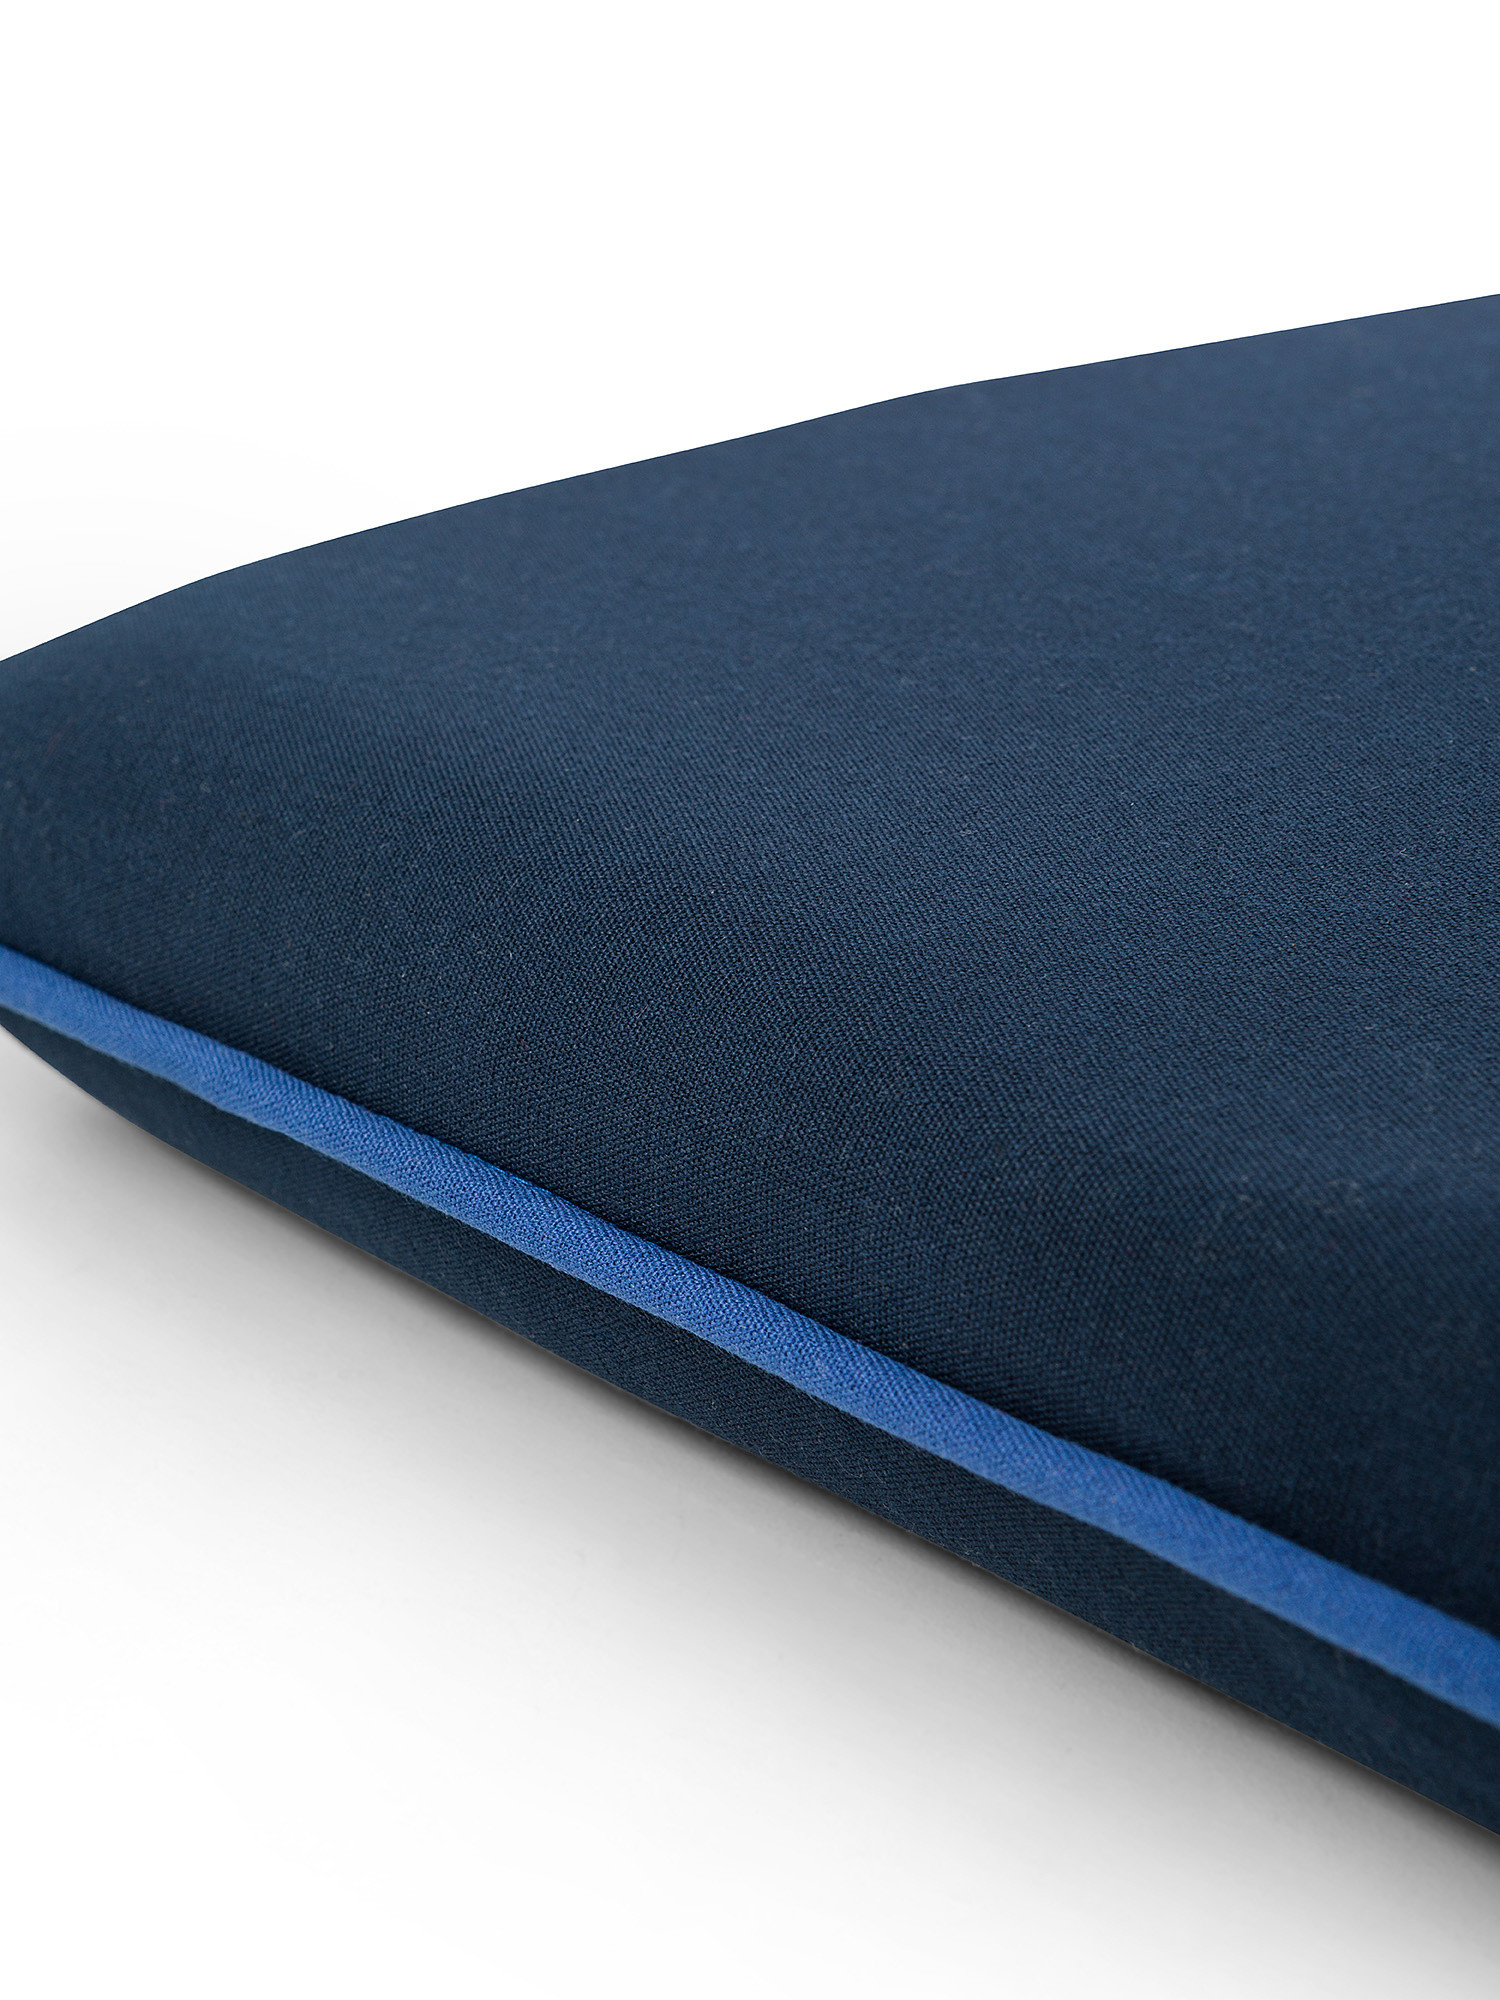 Cuscino sedia da esterno in tessuto tinta unita, Blu, large